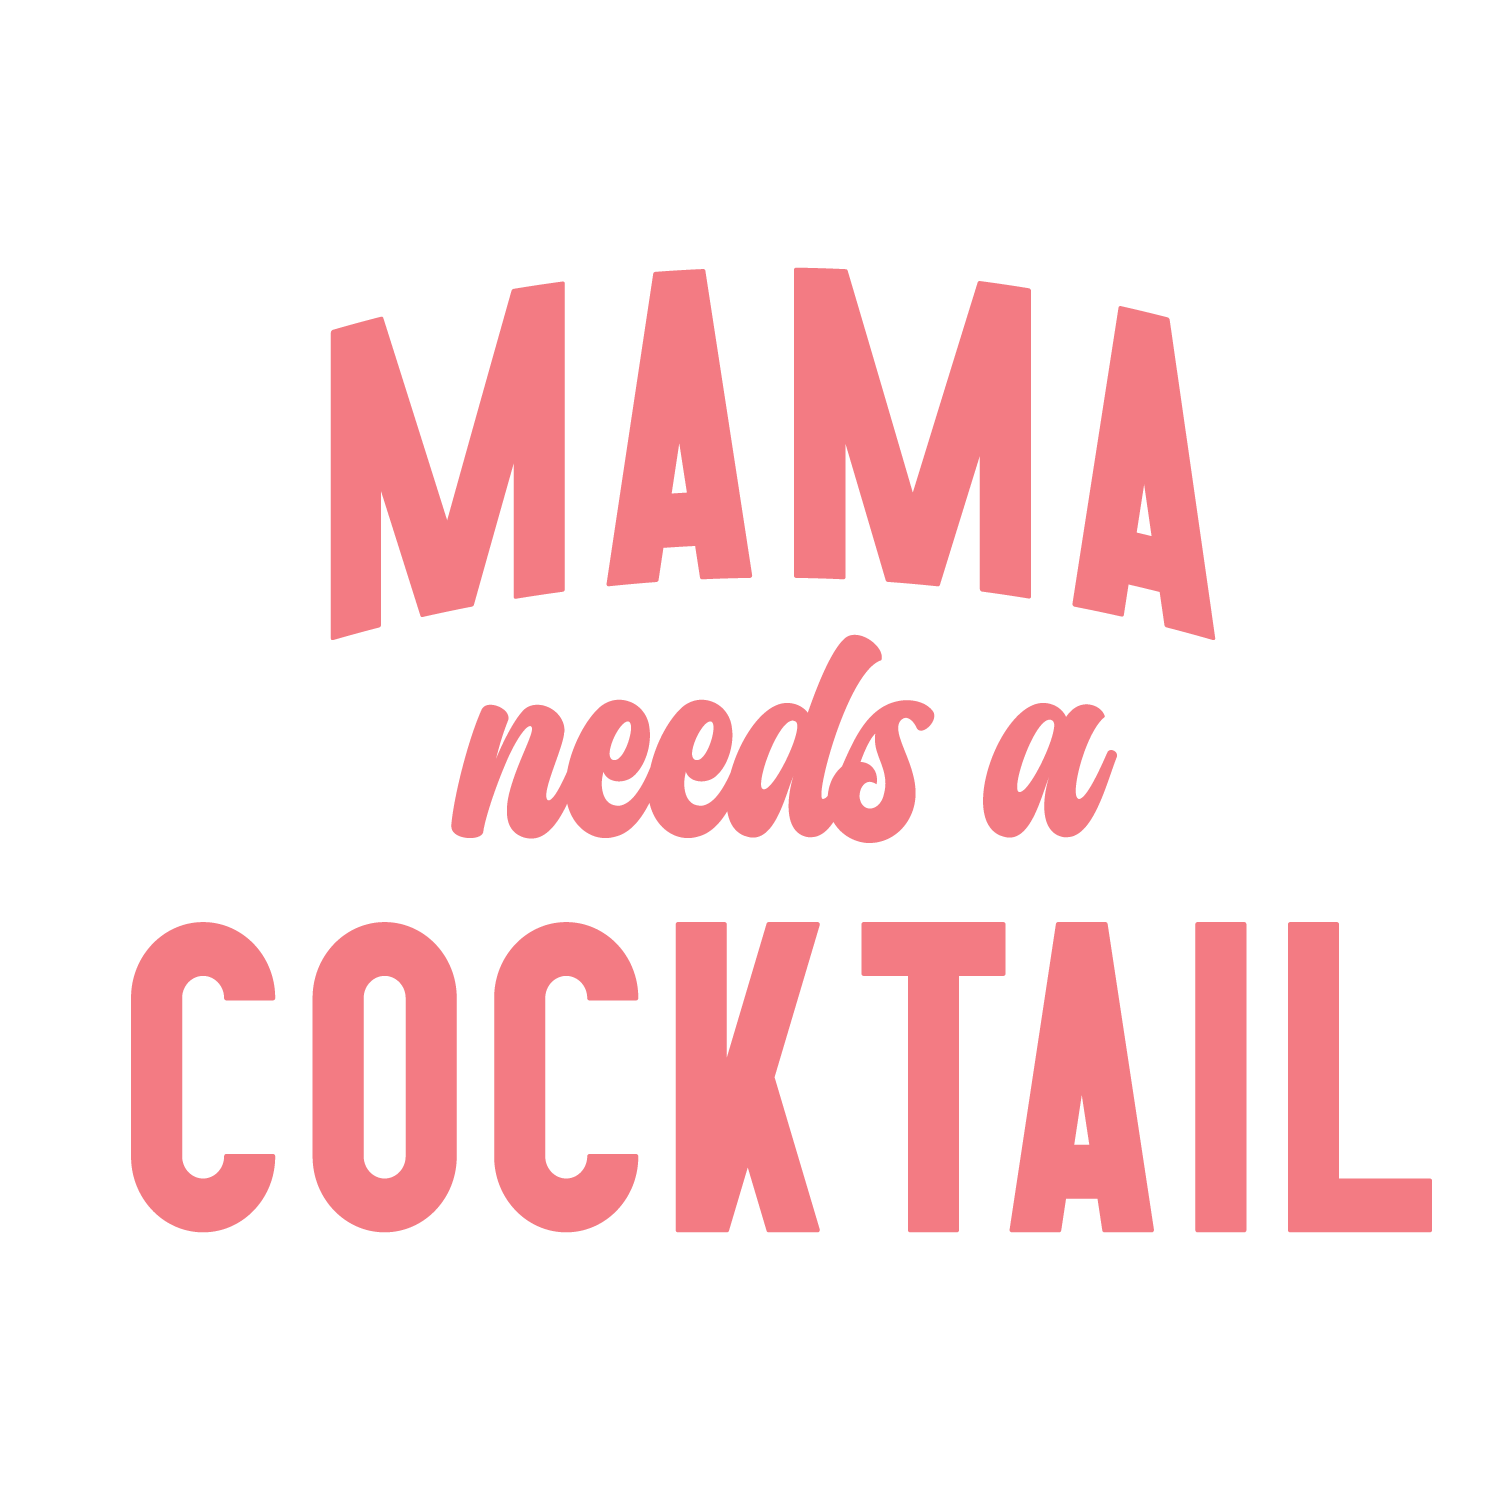 MAMA needs a Cocktail